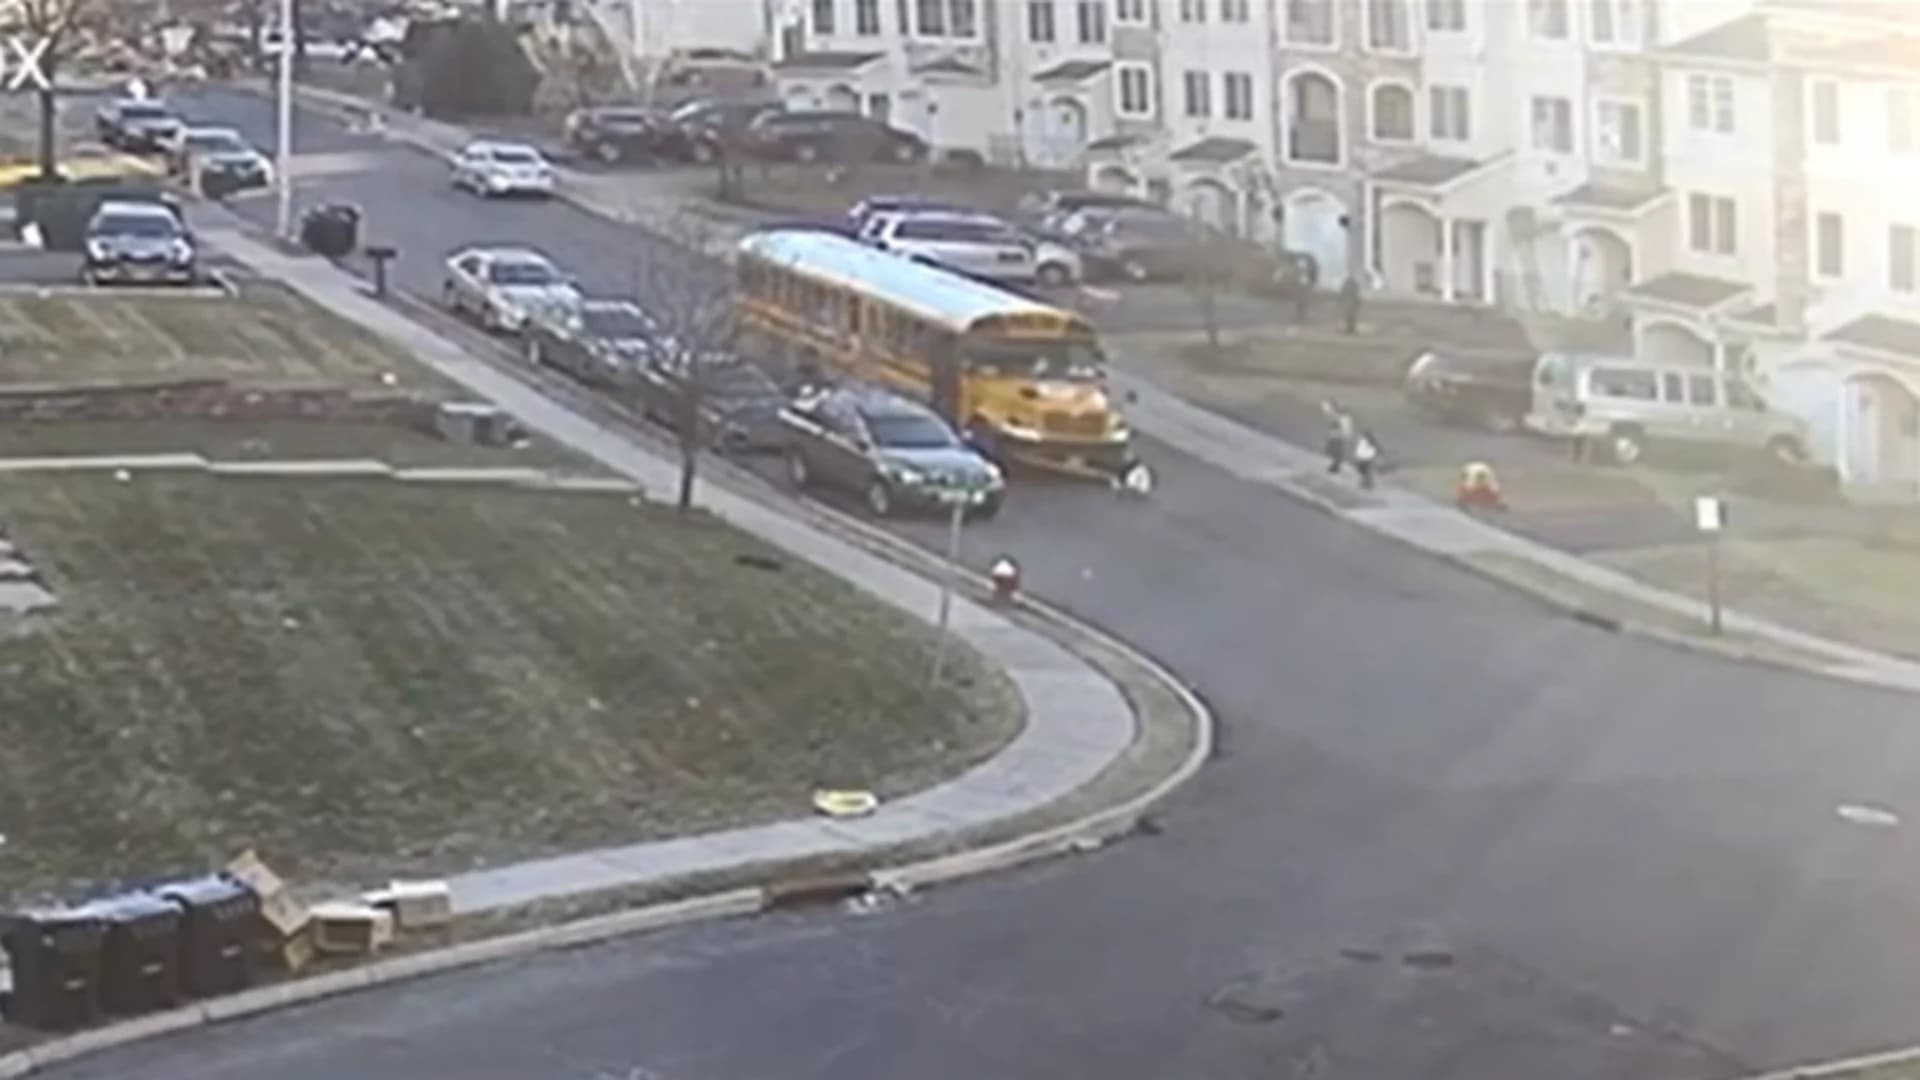 Video shows child being struck, caught underneath school bus in Monsey